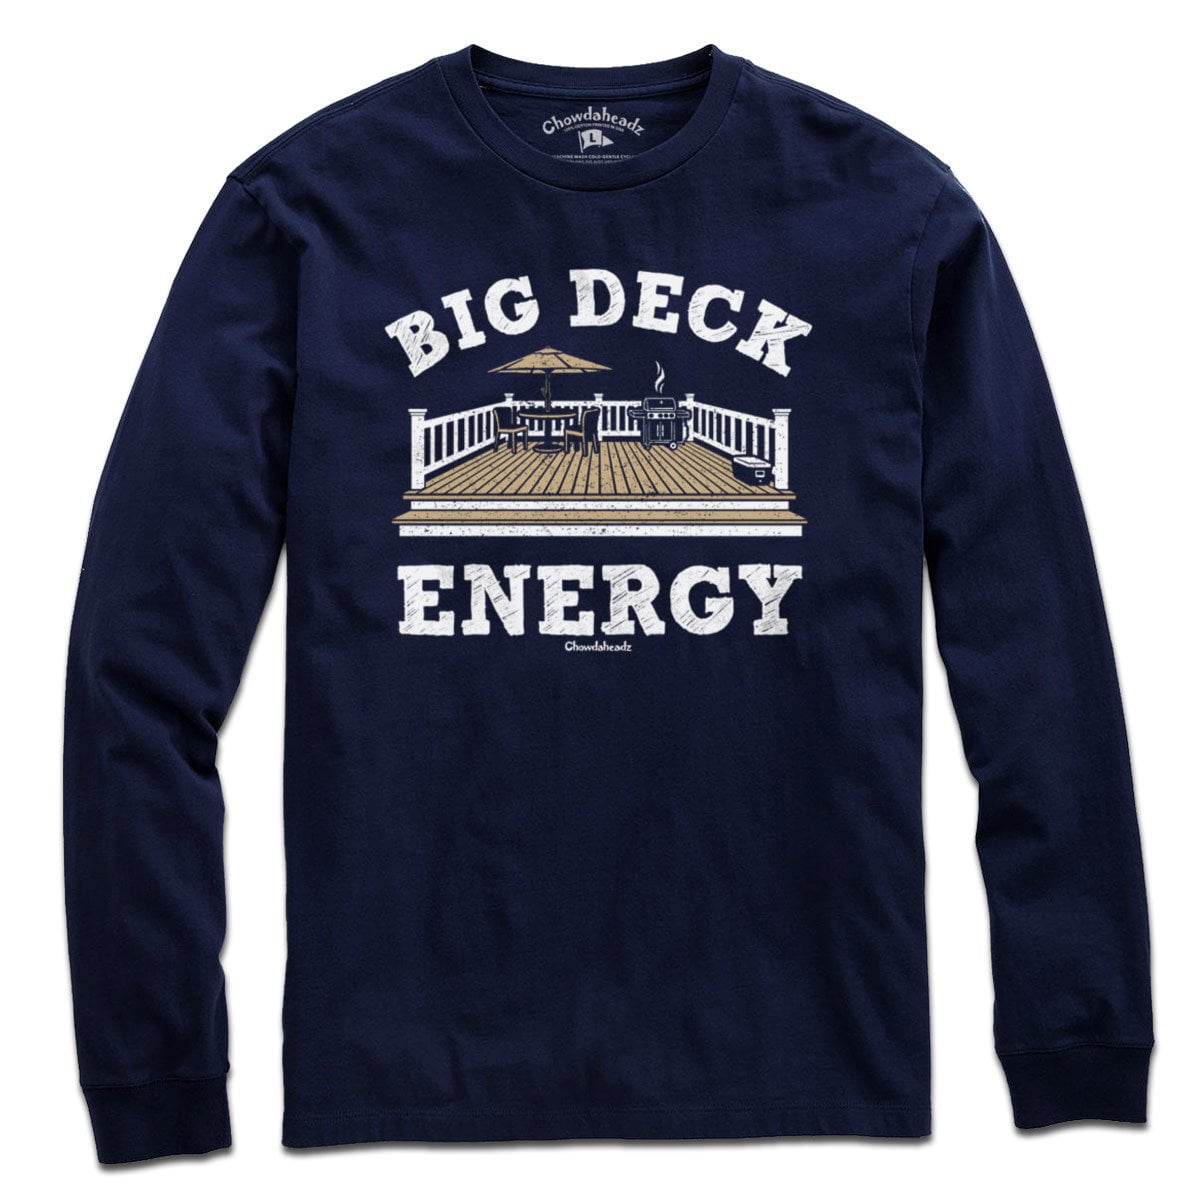 Big Deck Energy T-Shirt - Chowdaheadz